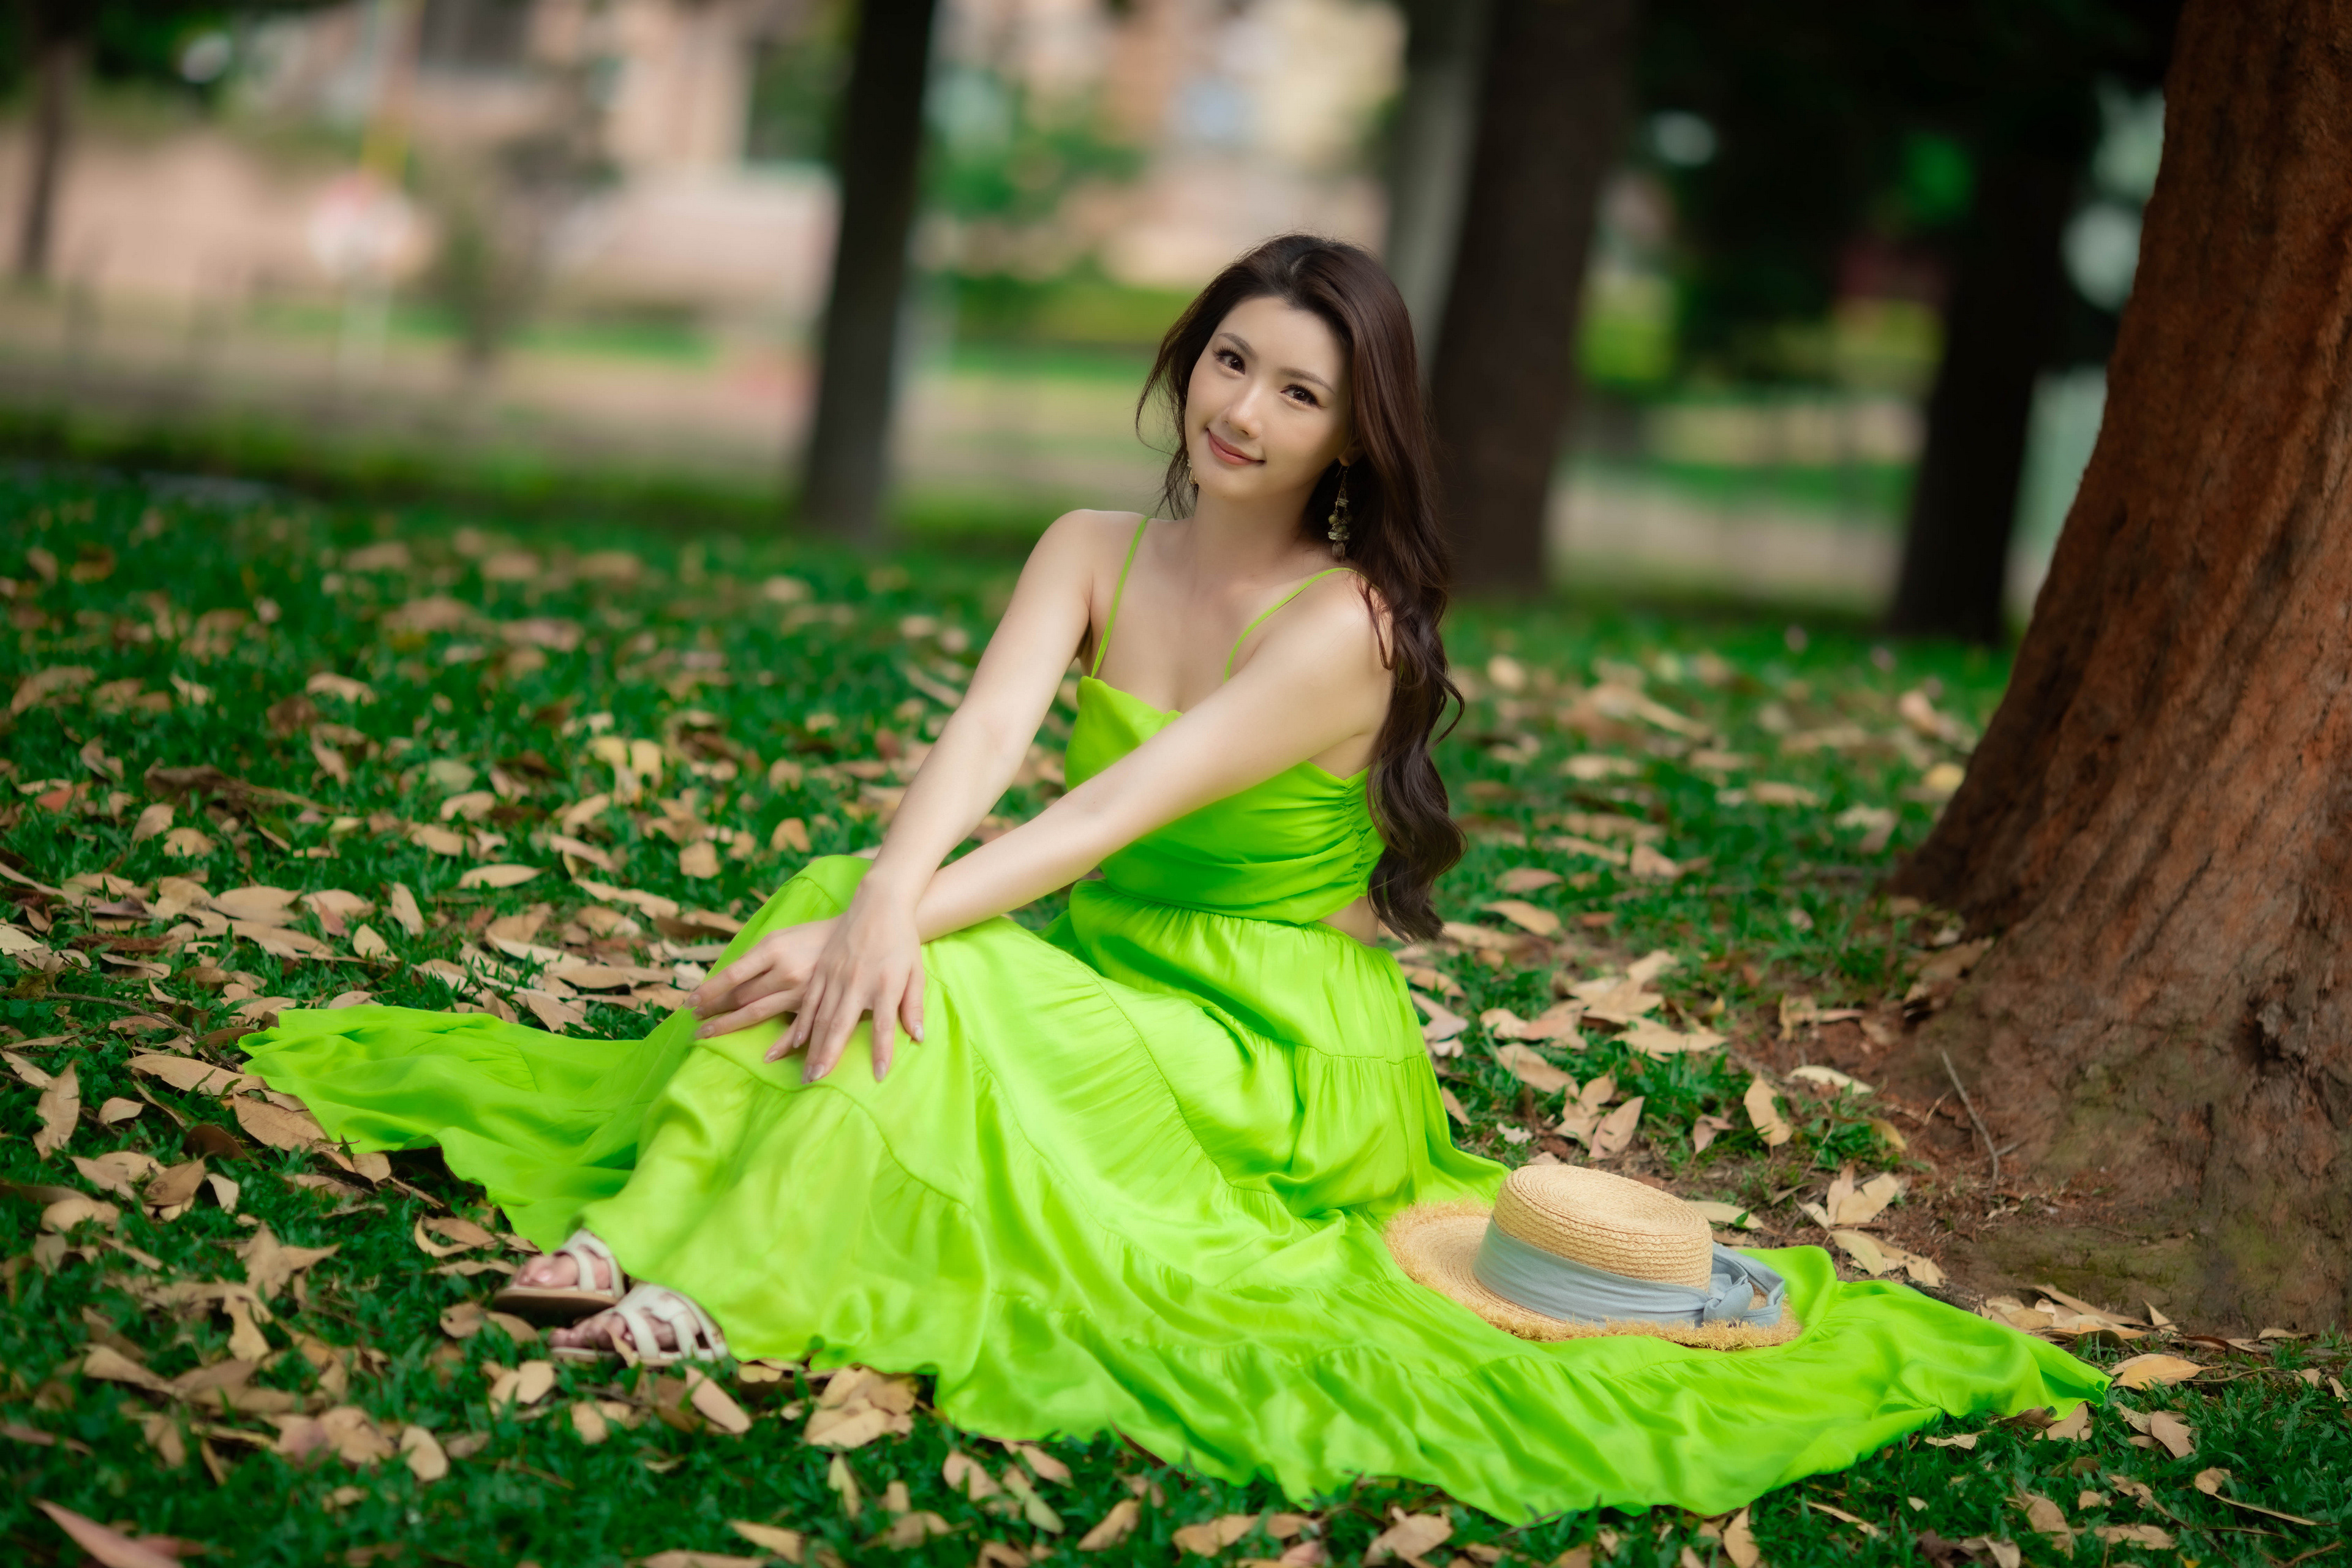 Asian Model Women Long Hair Dark Hair Sitting Green Dress Depth Of Field Trees Leaves Grass Barefoot 3840x2560